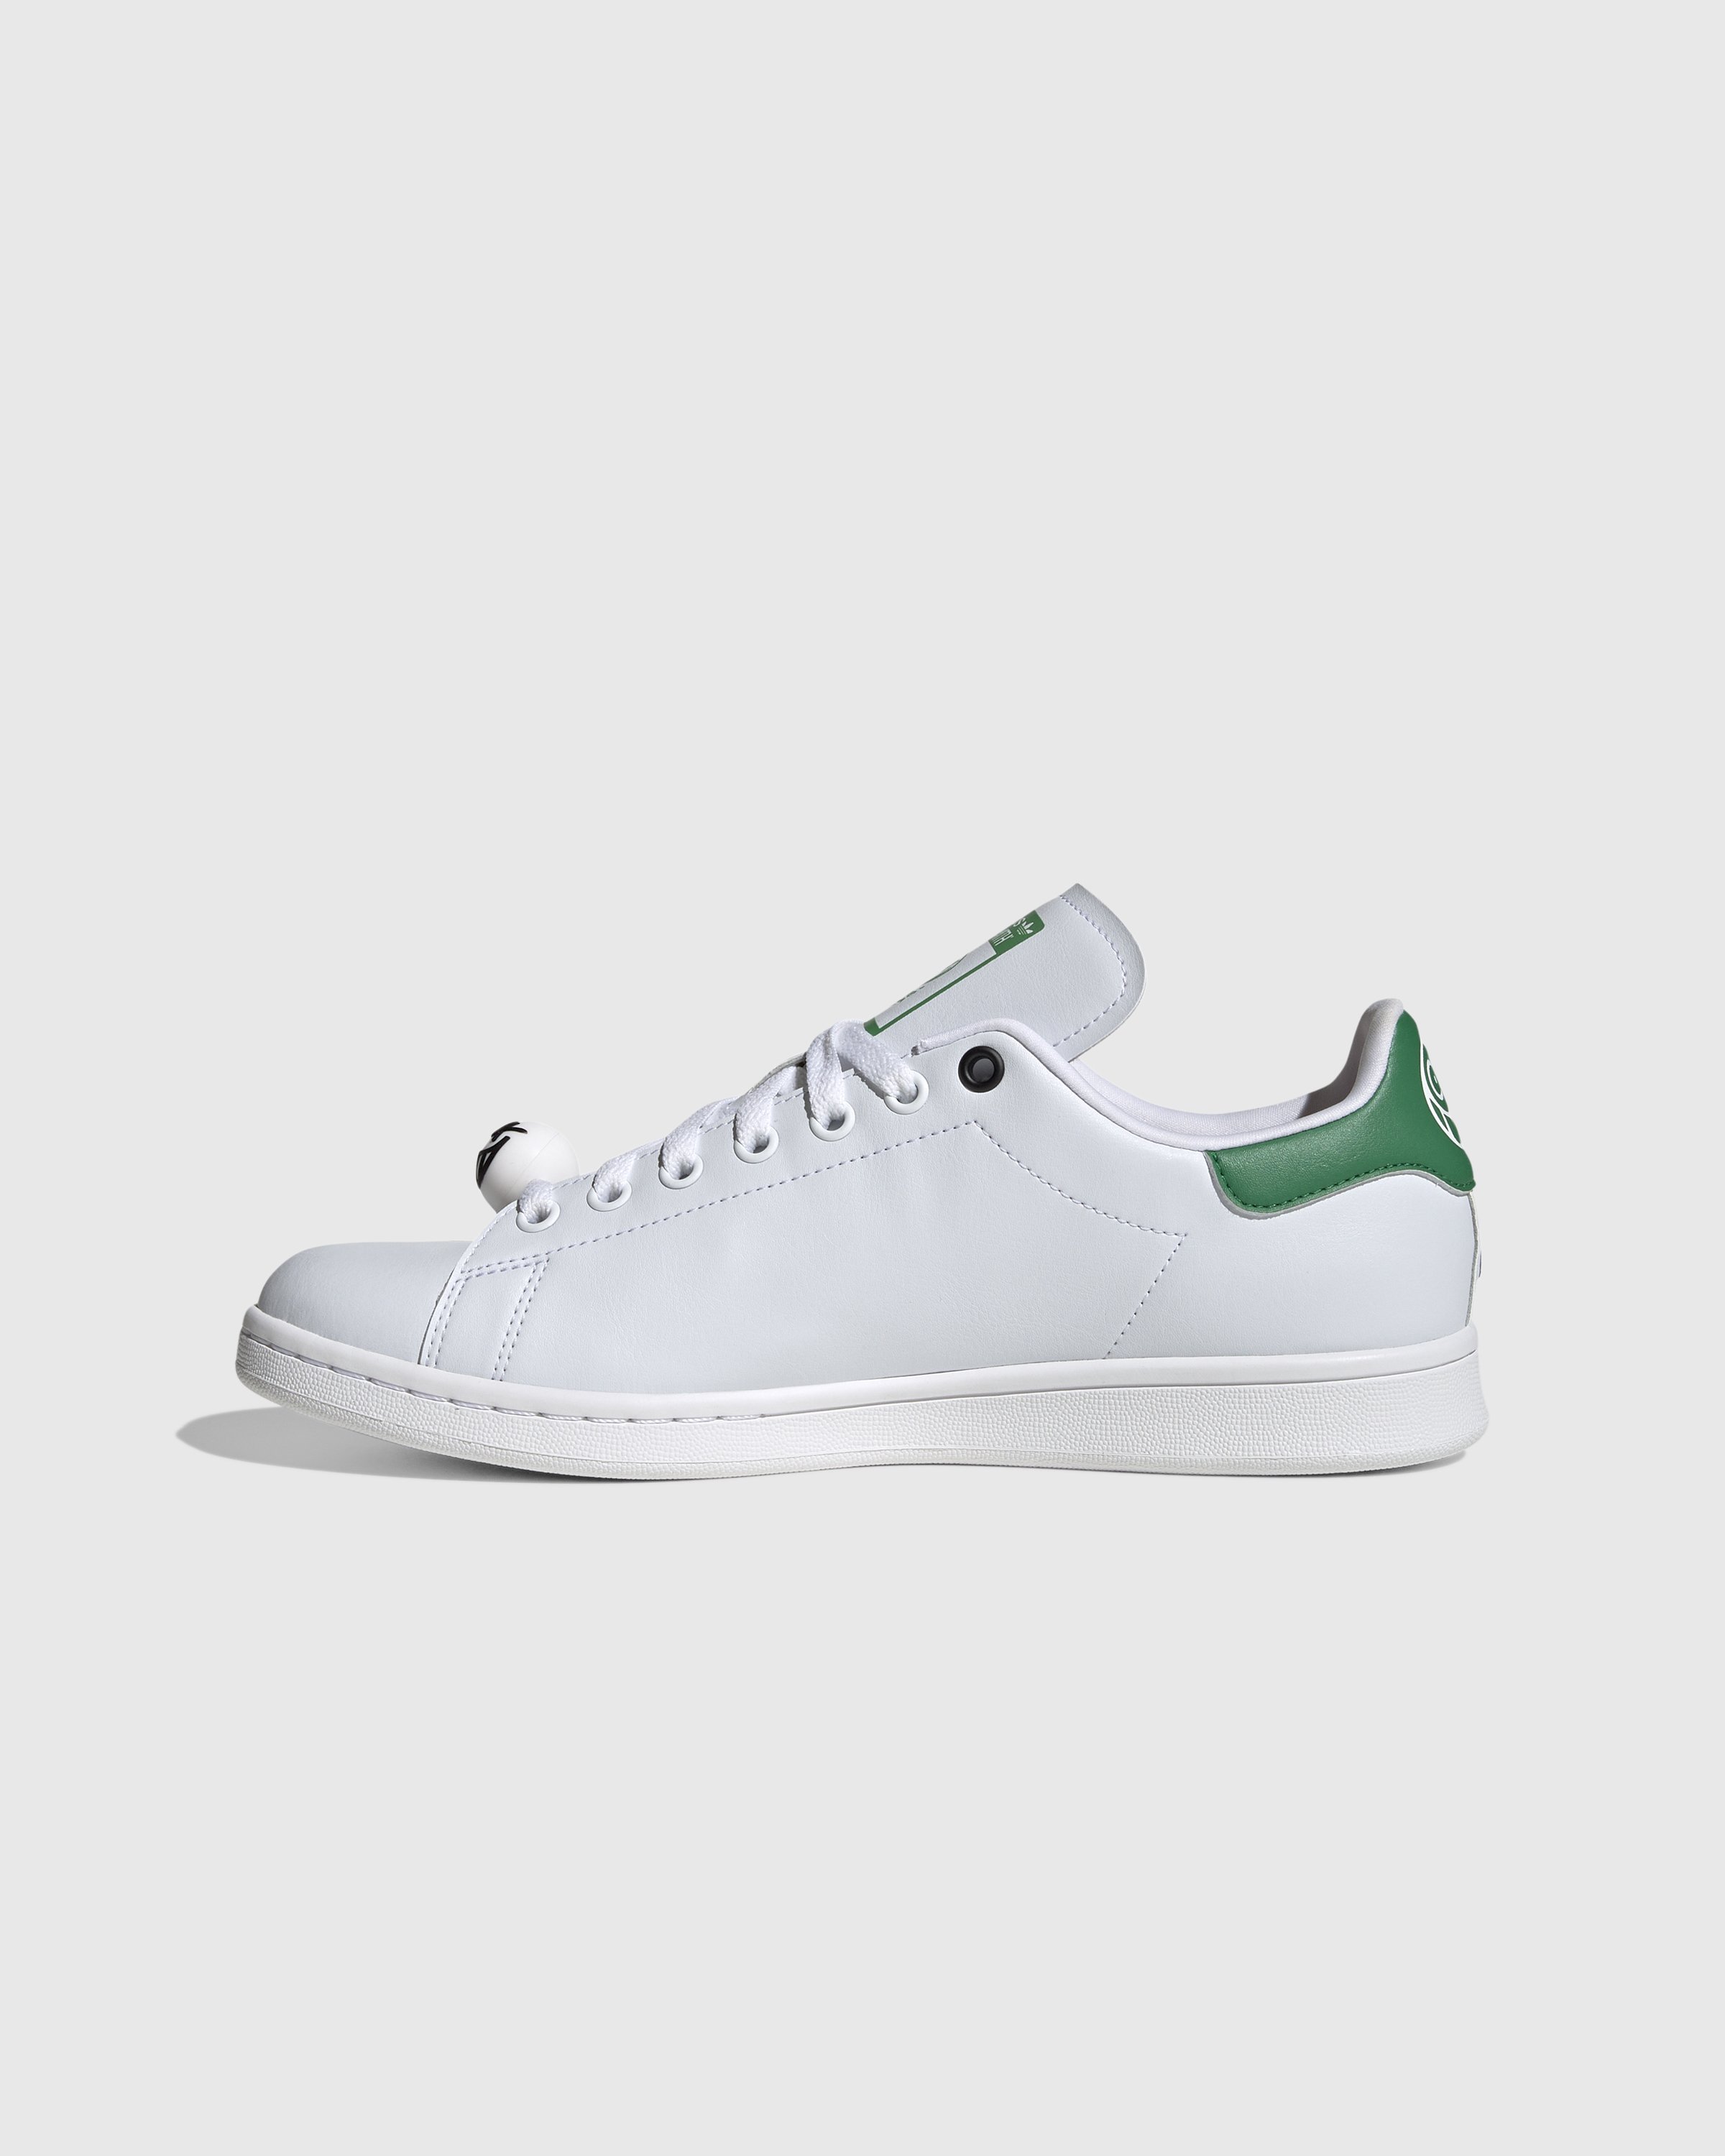 Adidas - André Saraiva Stan Smith White/Green - Footwear - White - Image 2